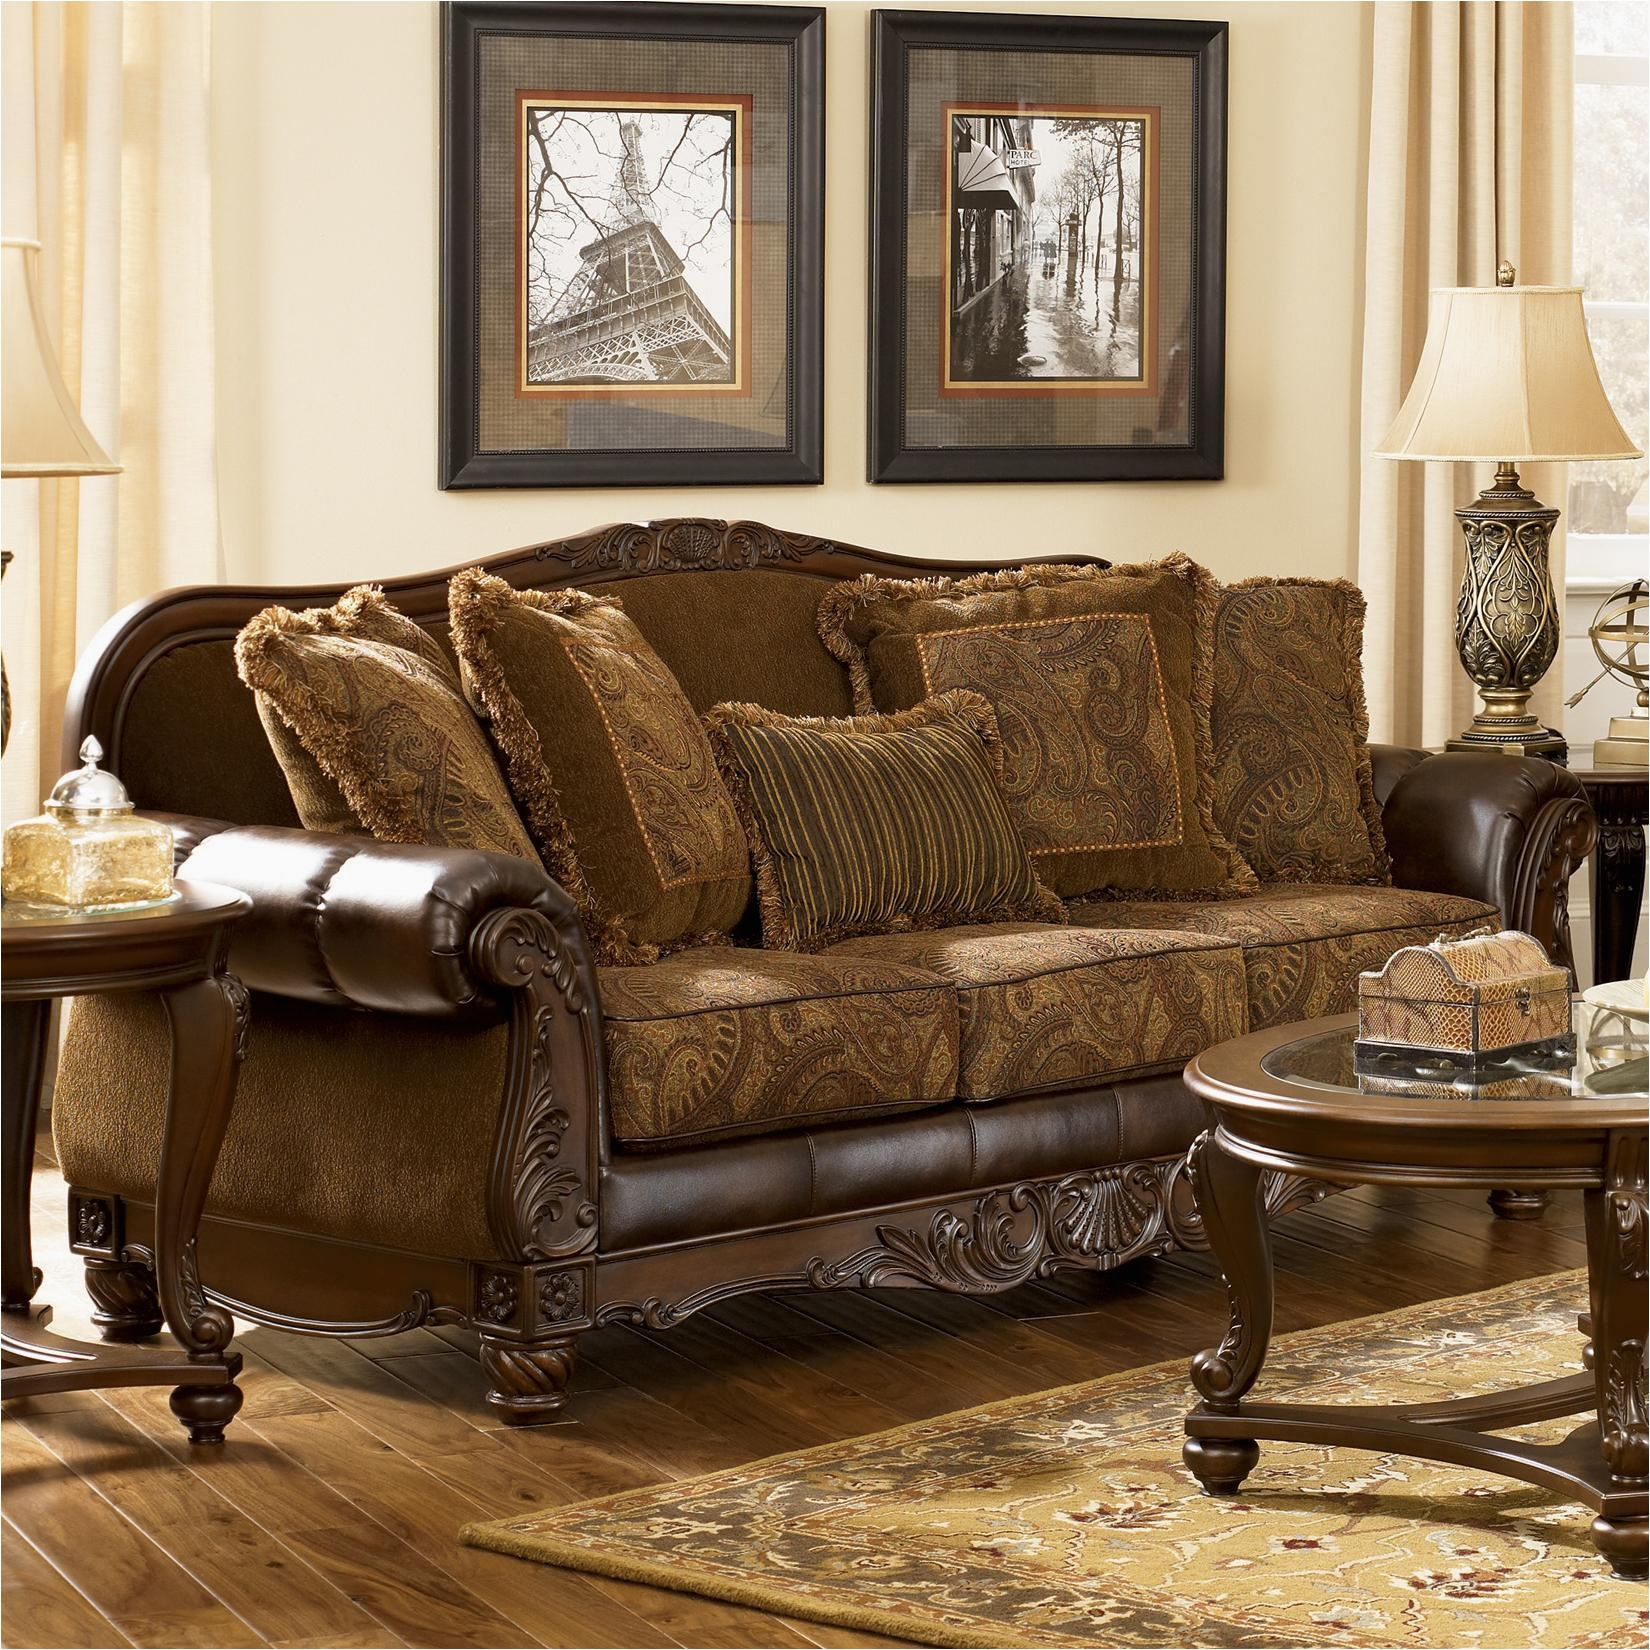 ashley furniture north carolina new new leather couch ashley furniture best home design image of ashley